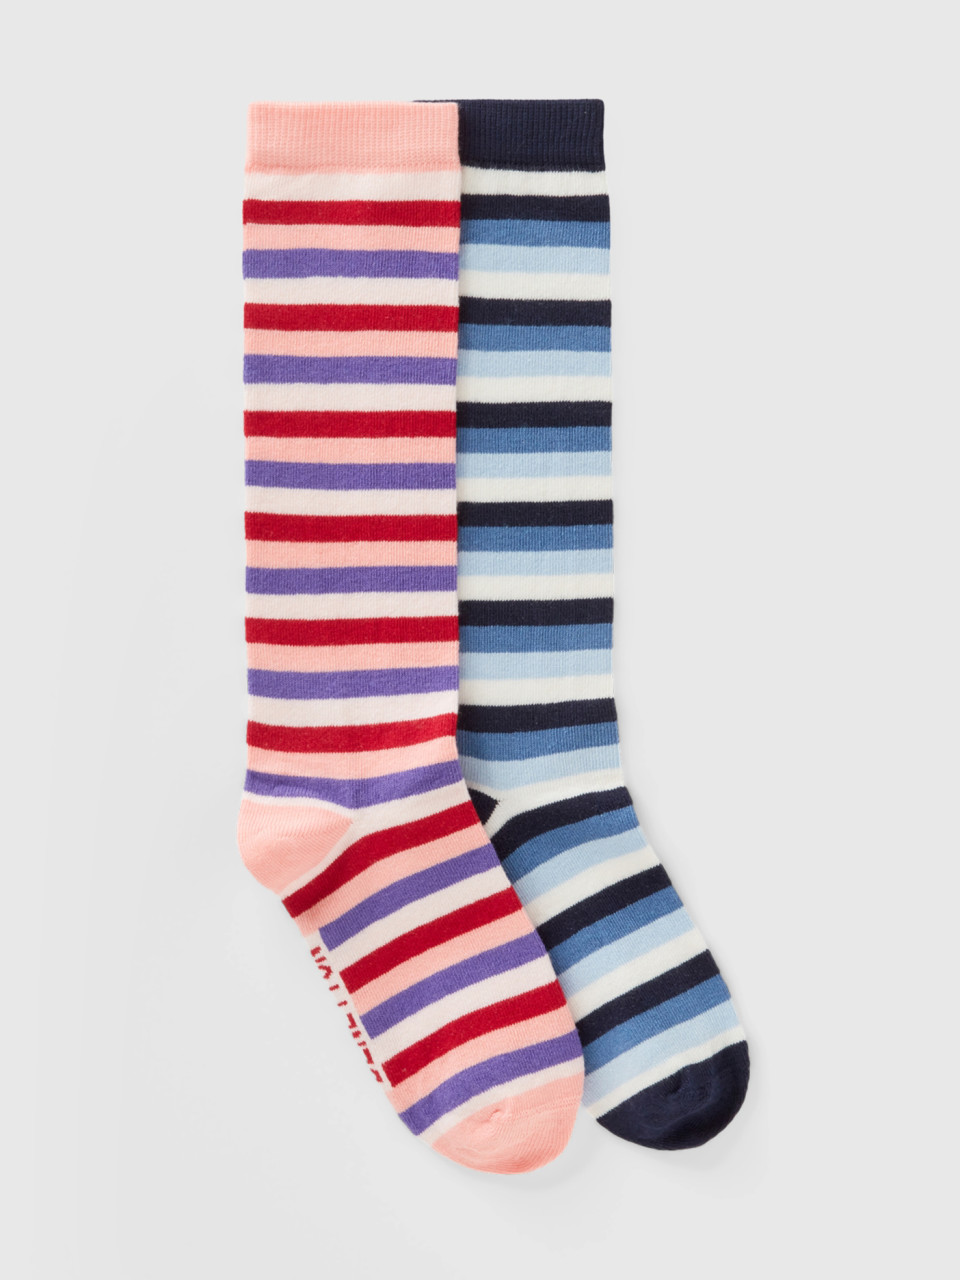 Benetton, Due Sets Of Striped Jacquard Socks, Multi-color, Kids